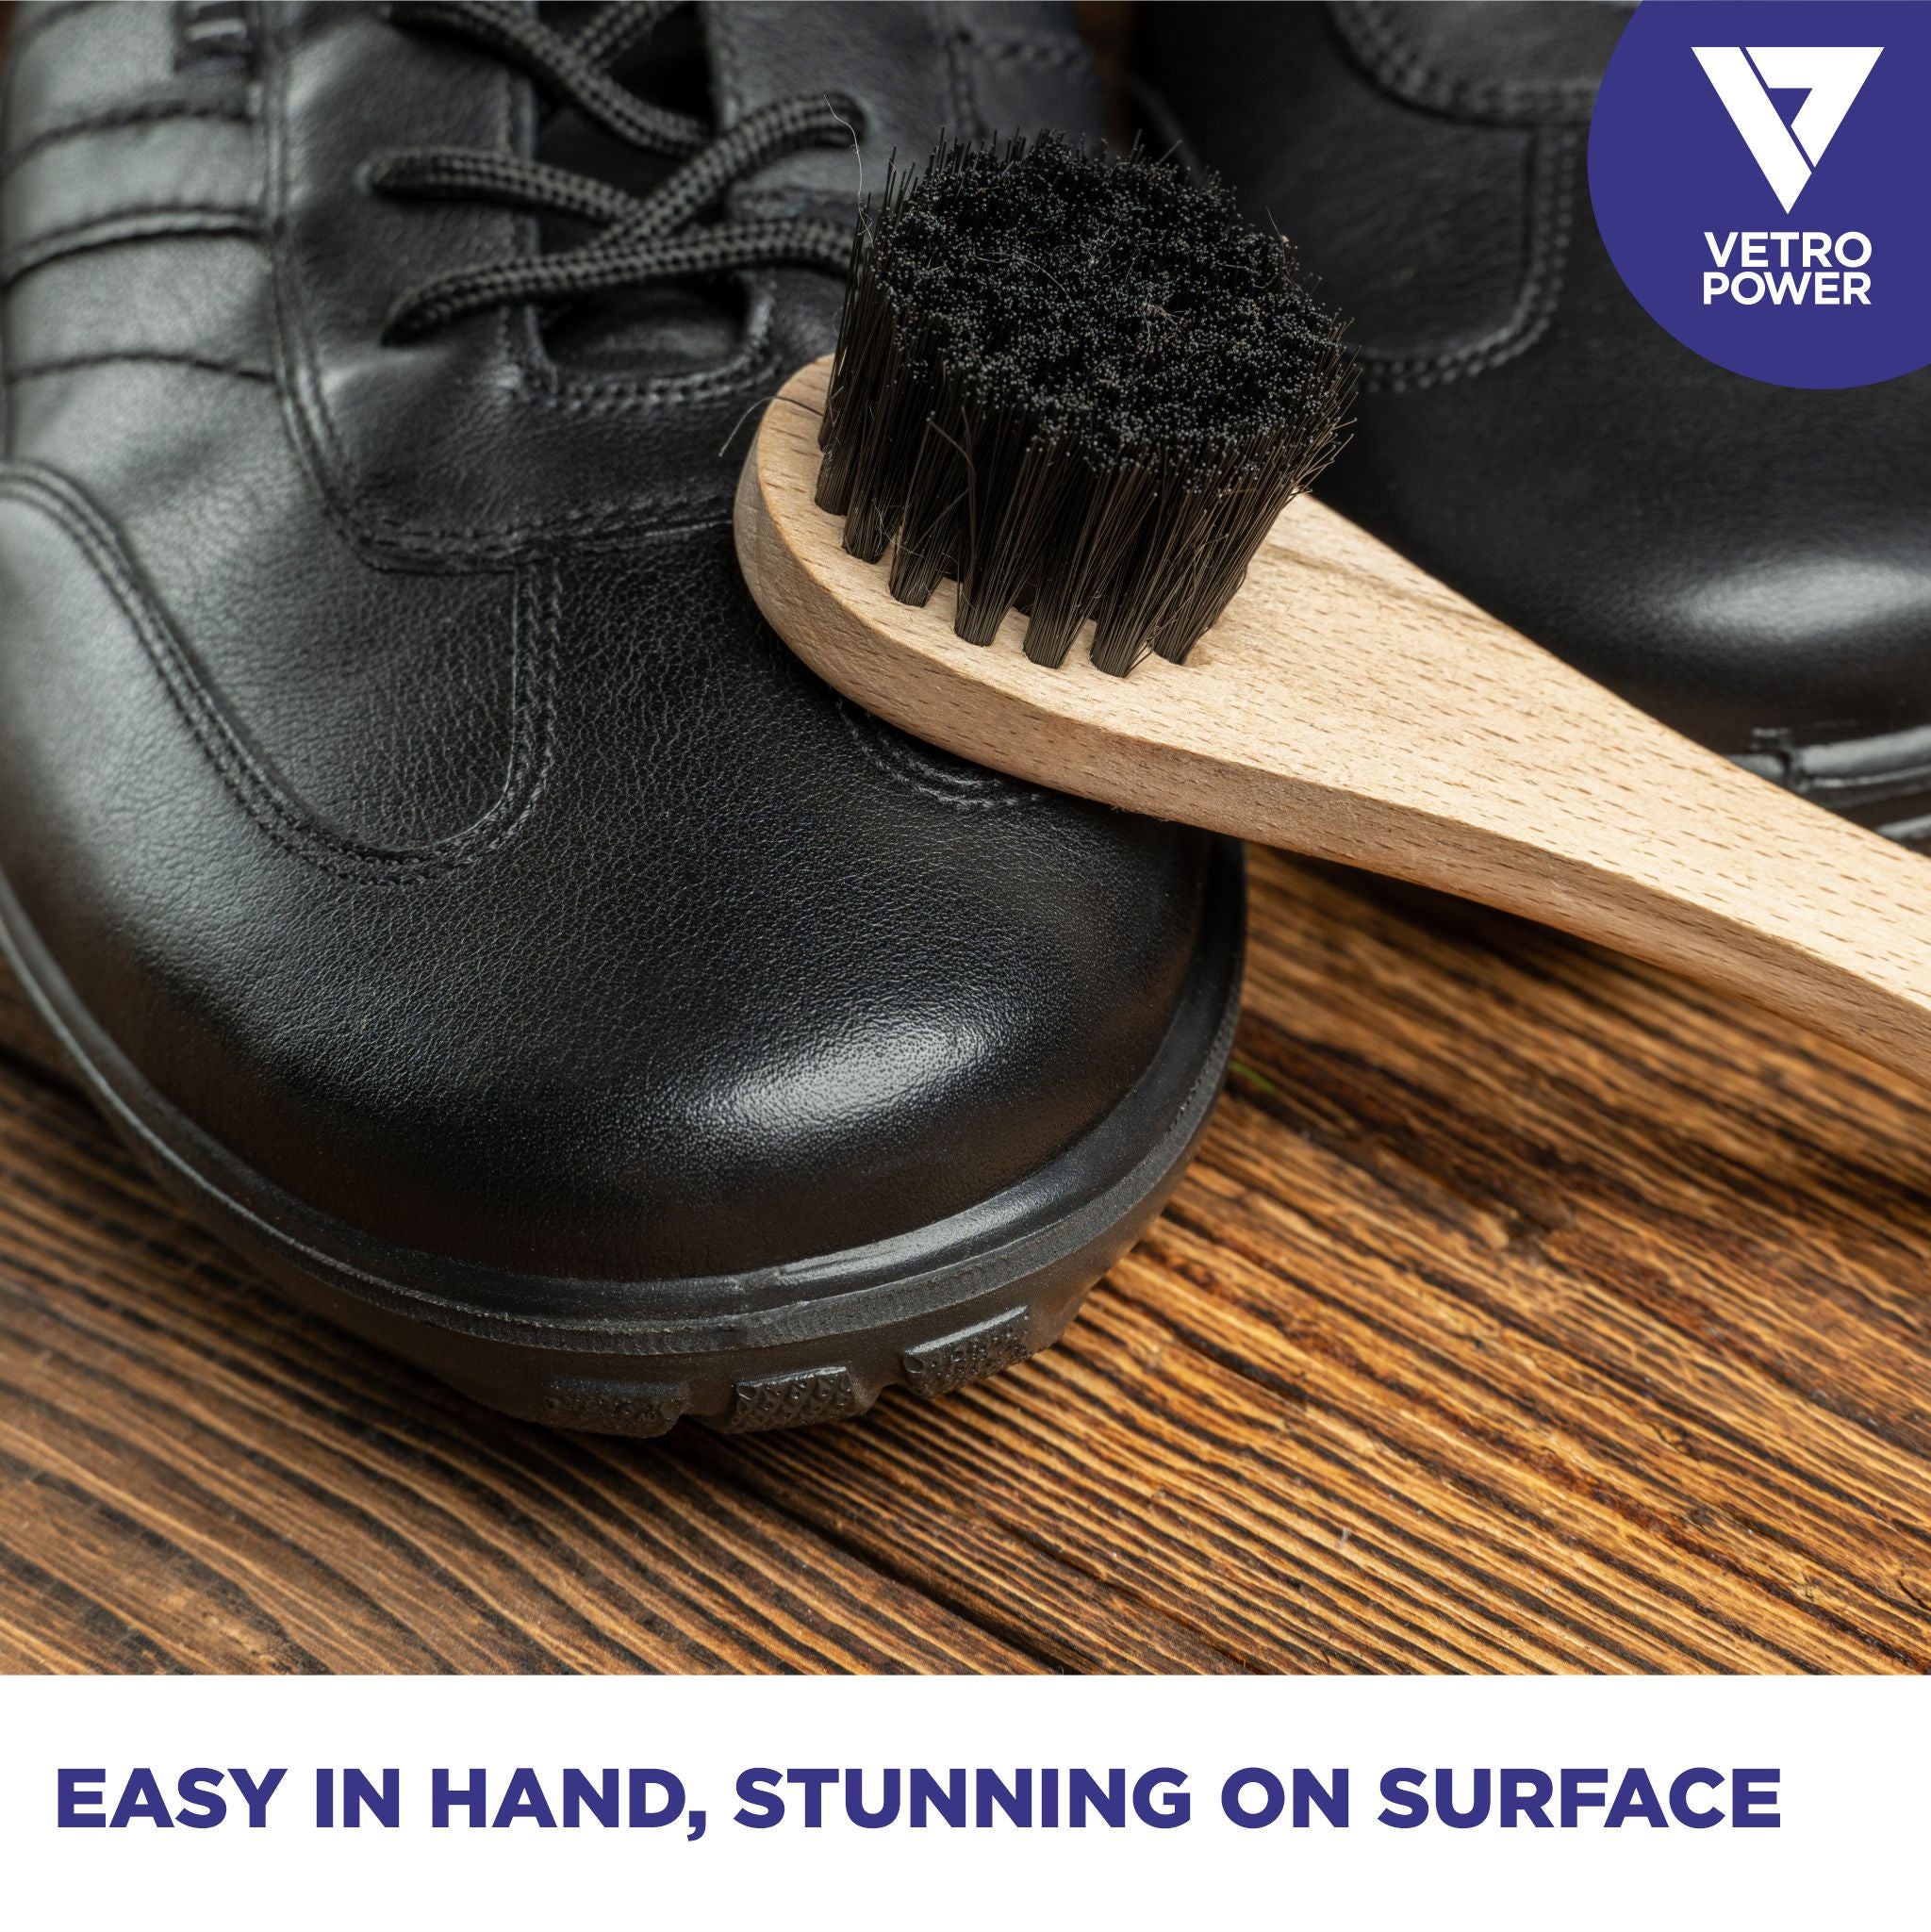 Vetro Power Footwear Protection applicator Brush